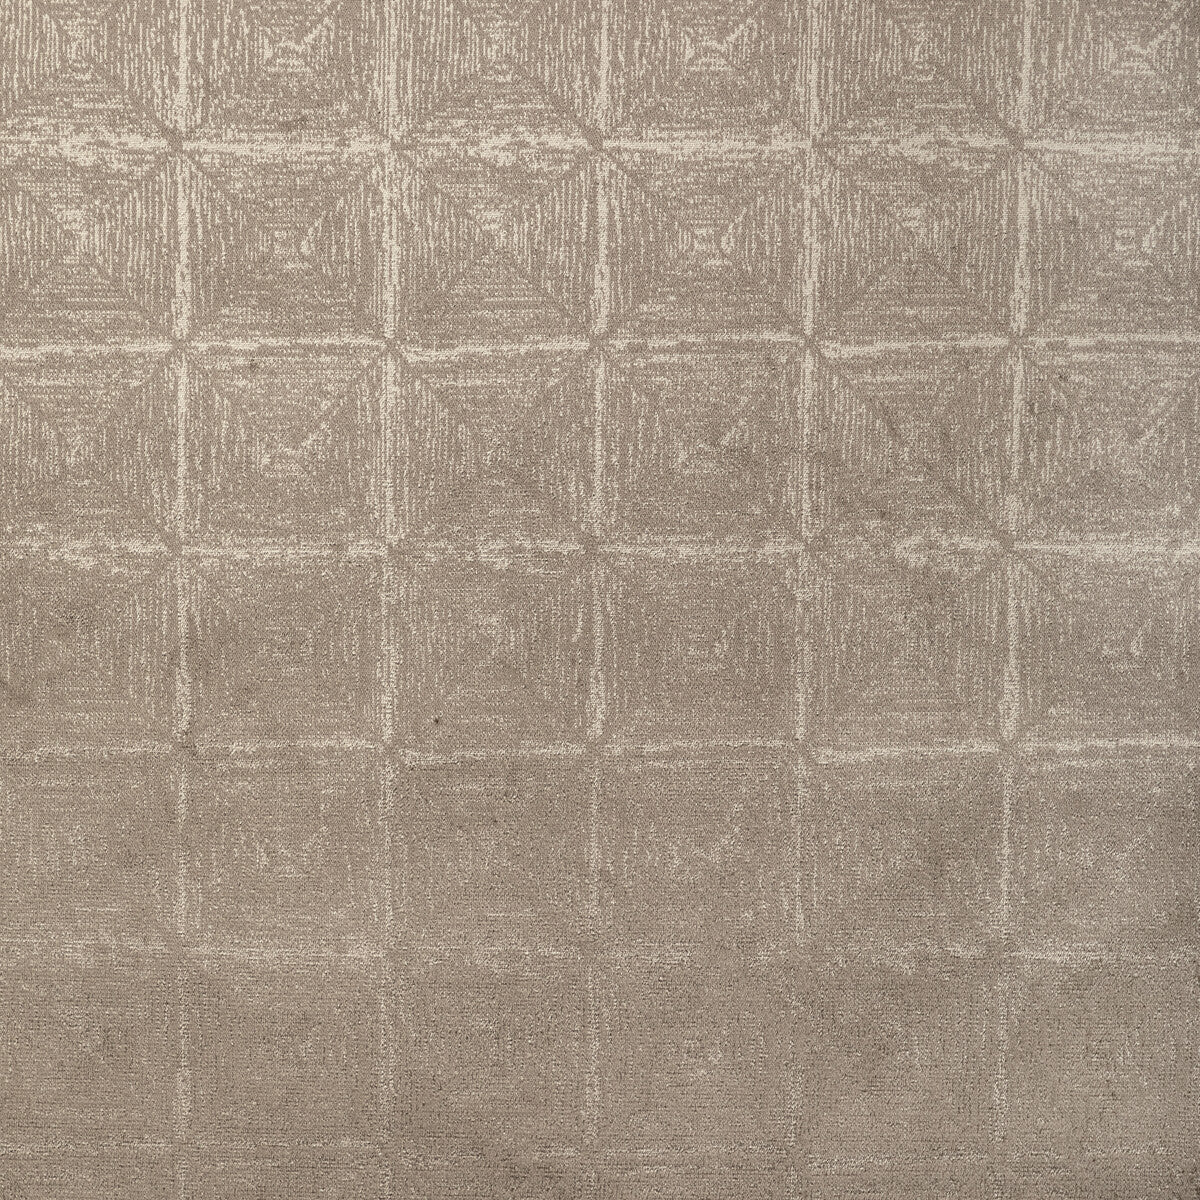 Illuminati fabric in prosecco color - pattern 36044.11.0 - by Kravet Contract